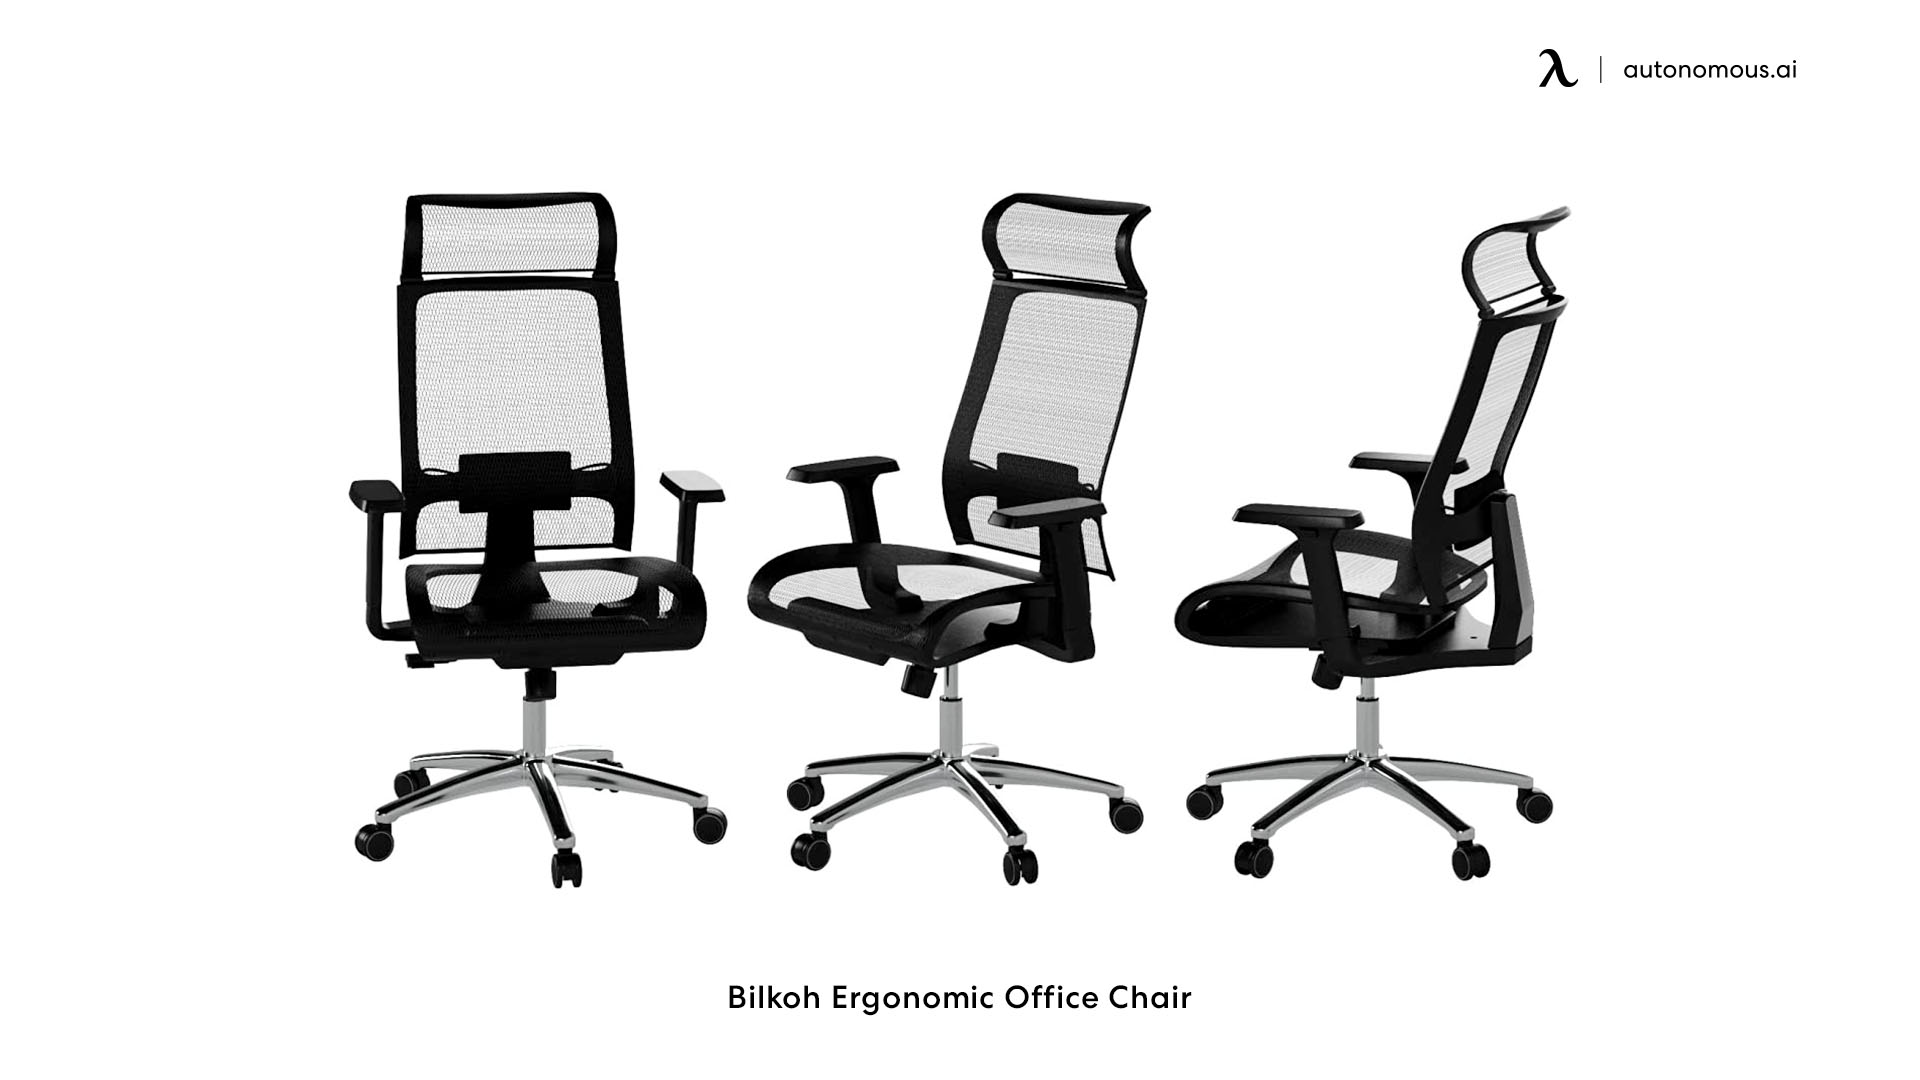 Bilkoh mesh office chair with a headrest